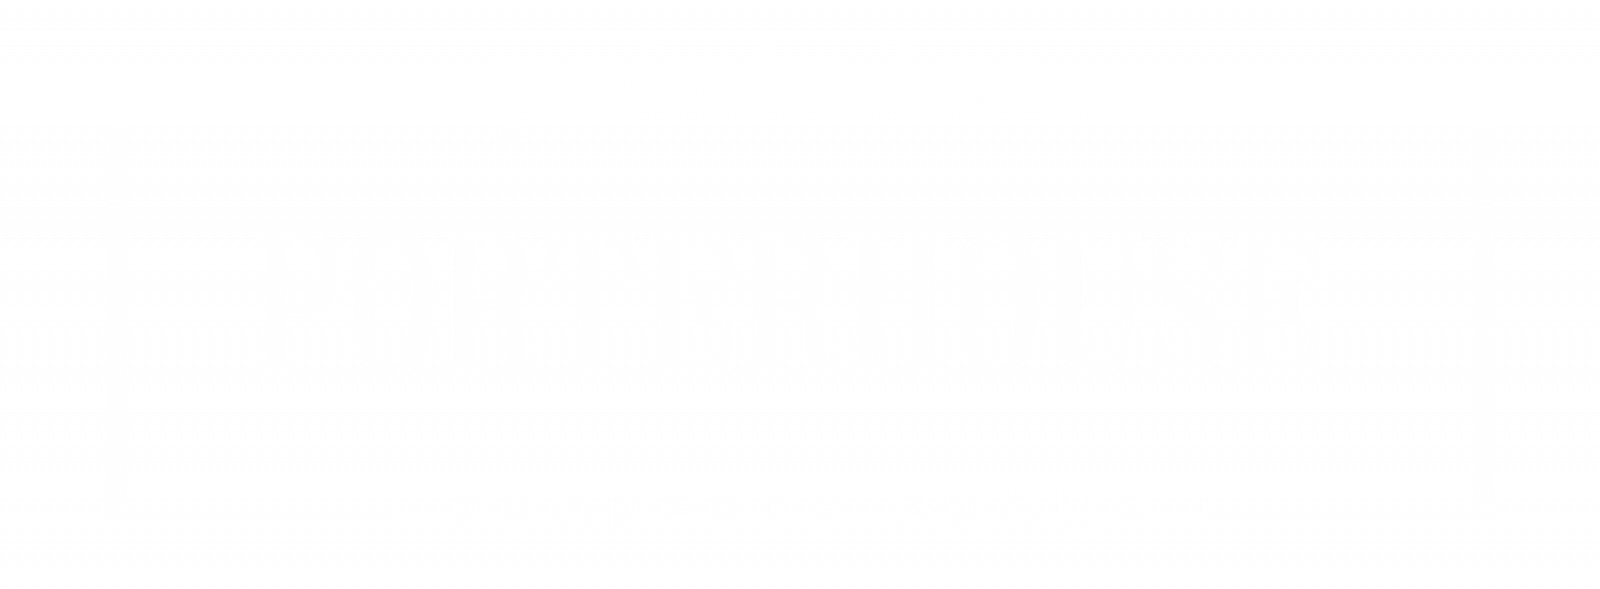 Porterhouse Property Group